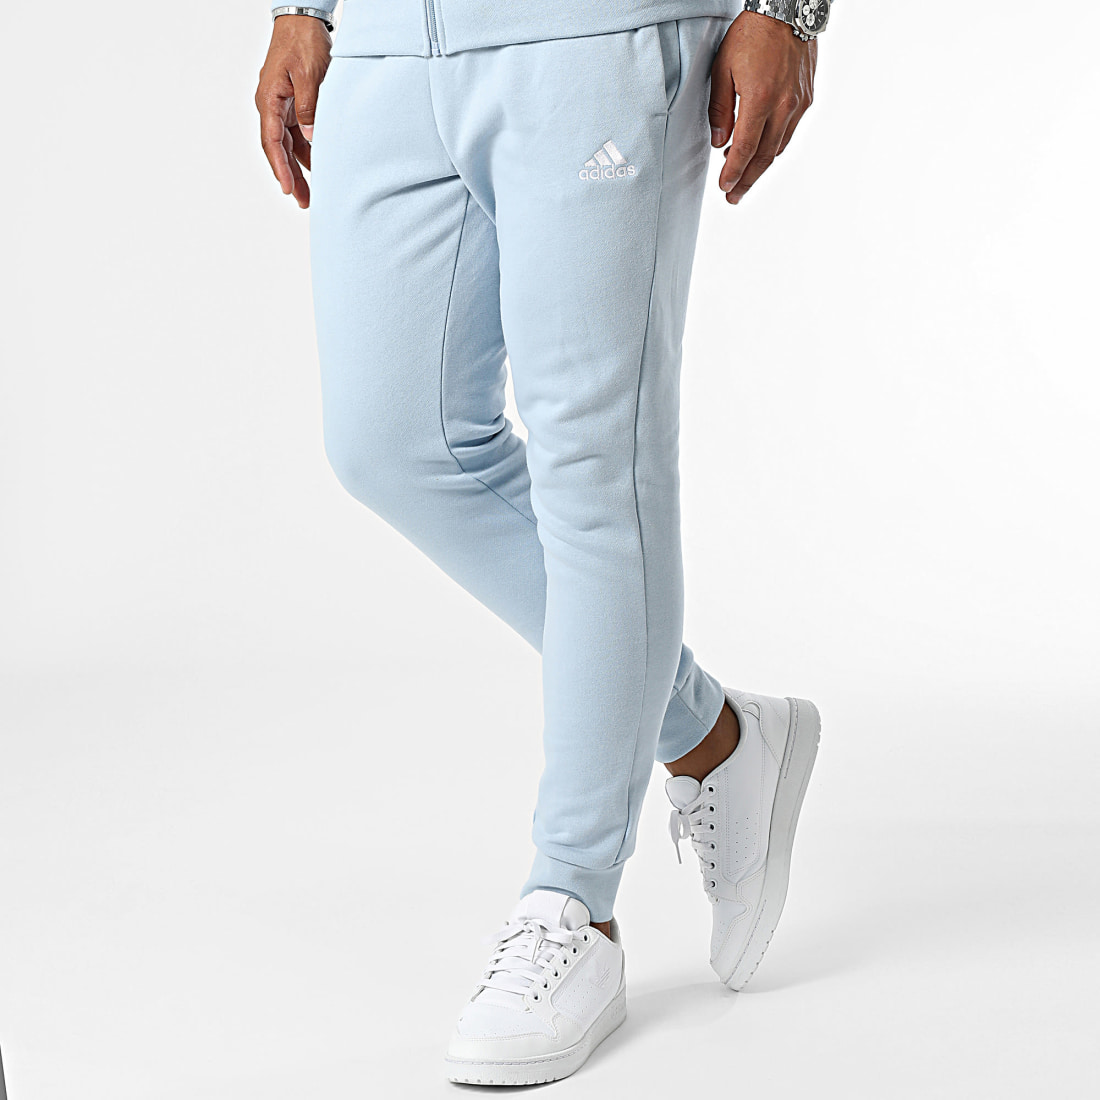 Pantalon survêtement adidas Tiro bleu ciel sur